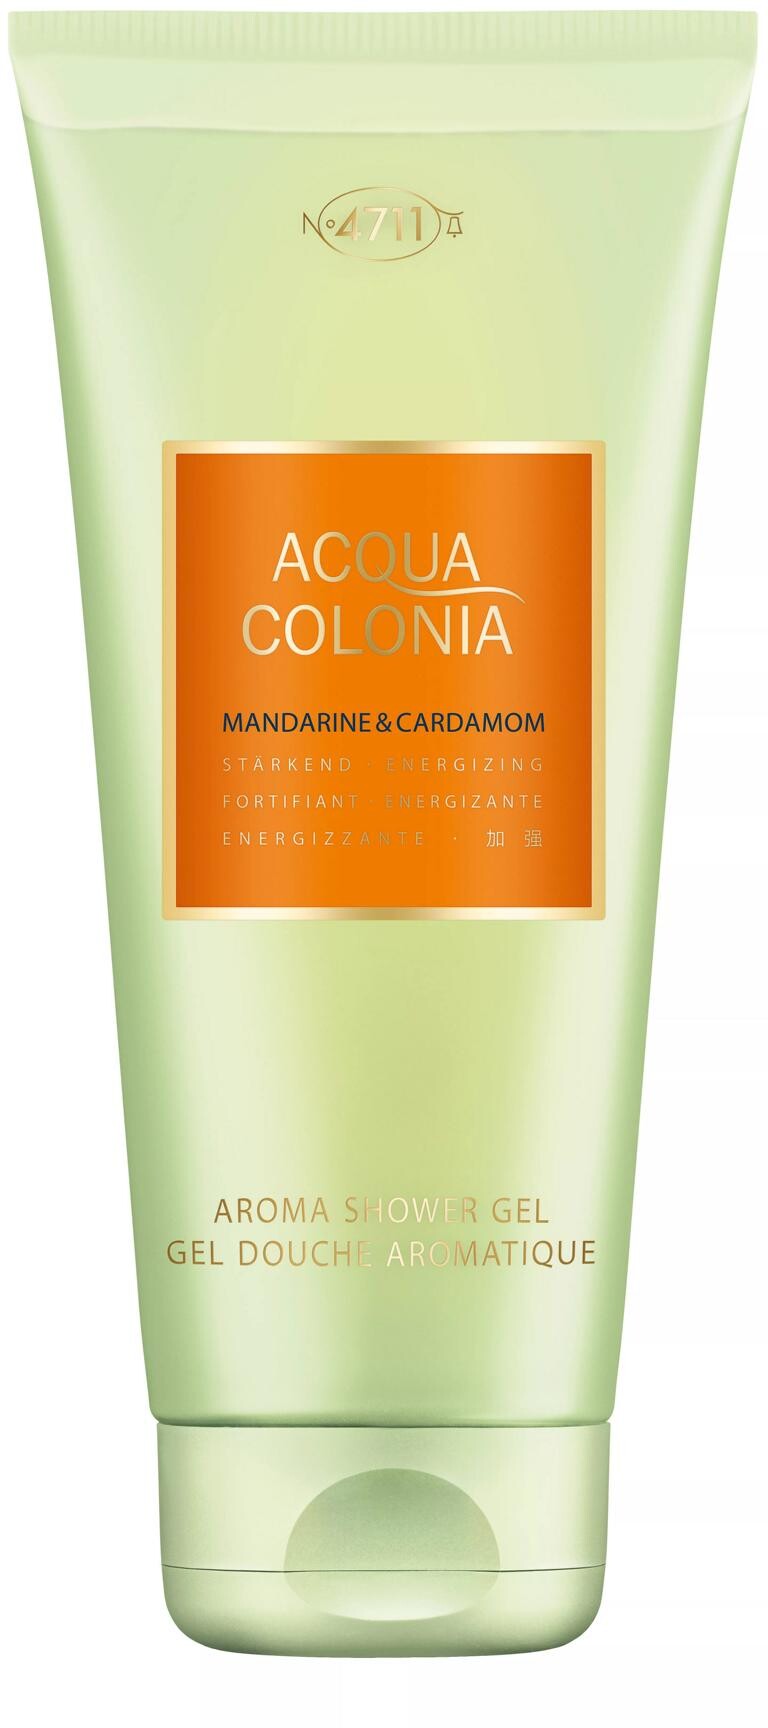 Duschgel 4711 Acqua Colonia Mandarine und Cardamom 200ml kaufen